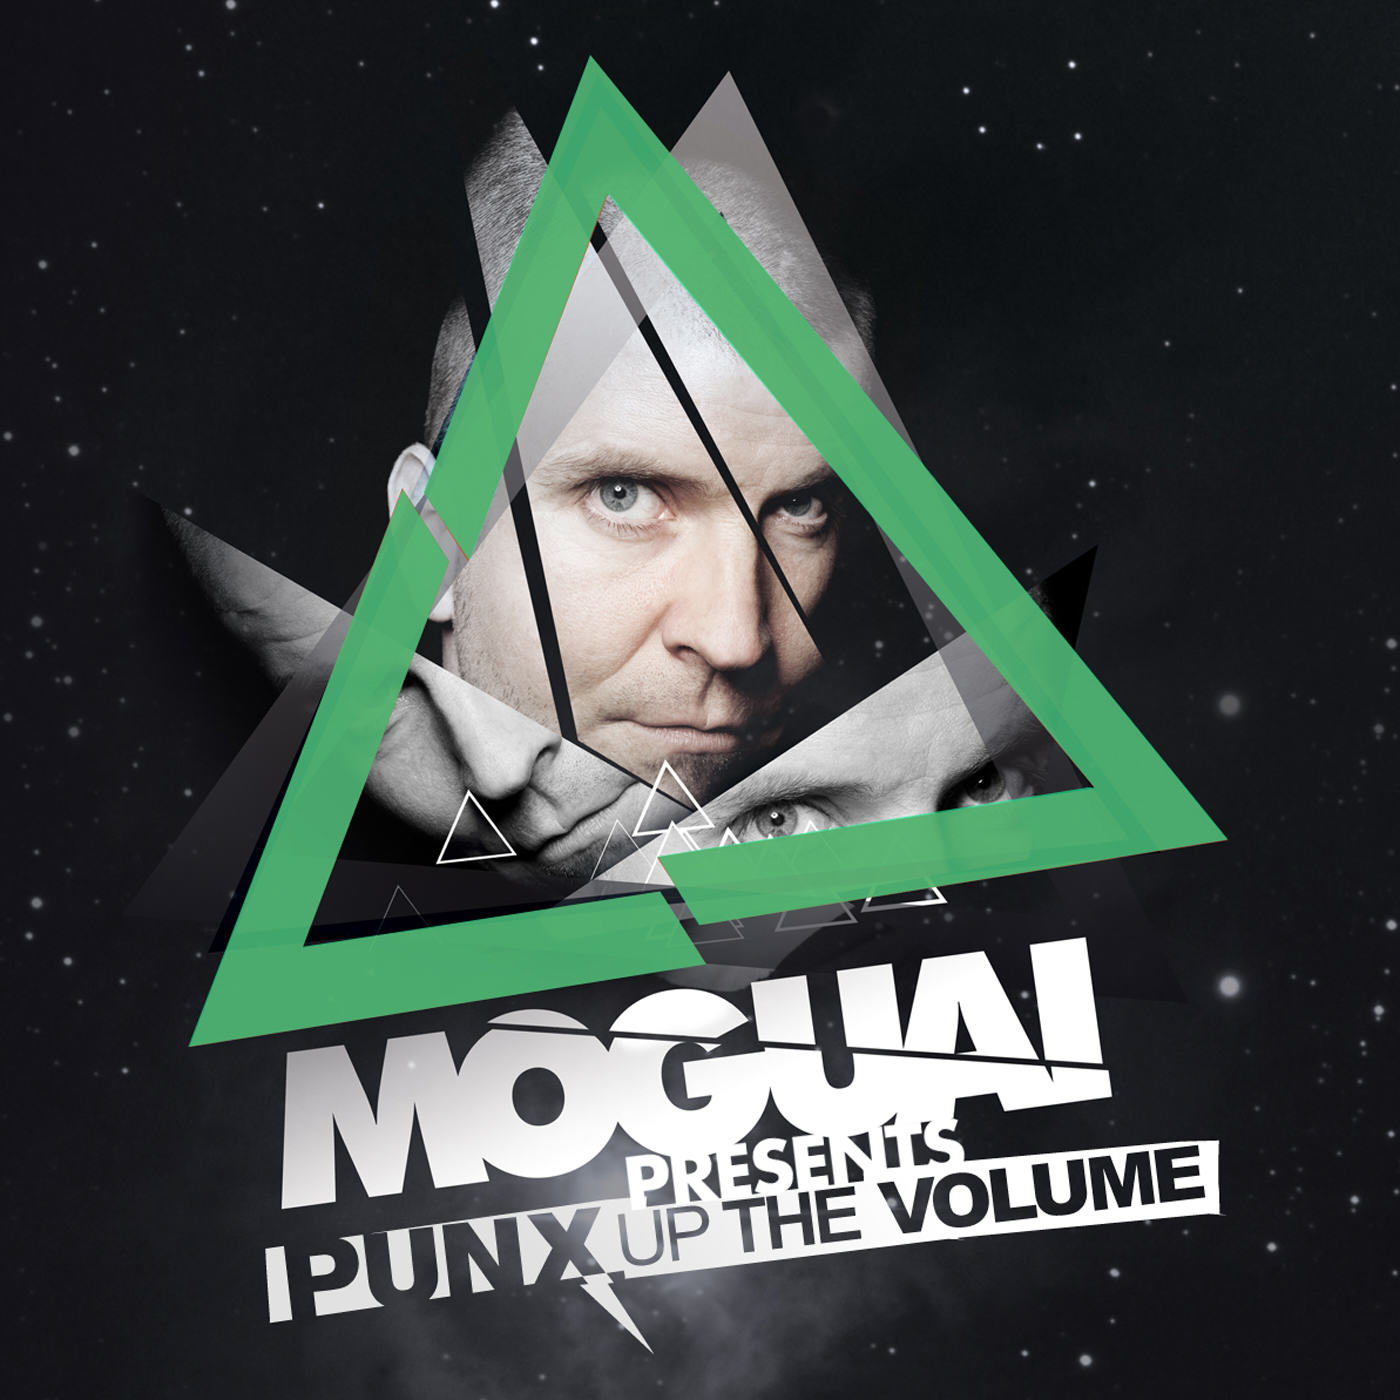 MOGUAI Podcast - PUNX Up The Volume - July 2010 Edition